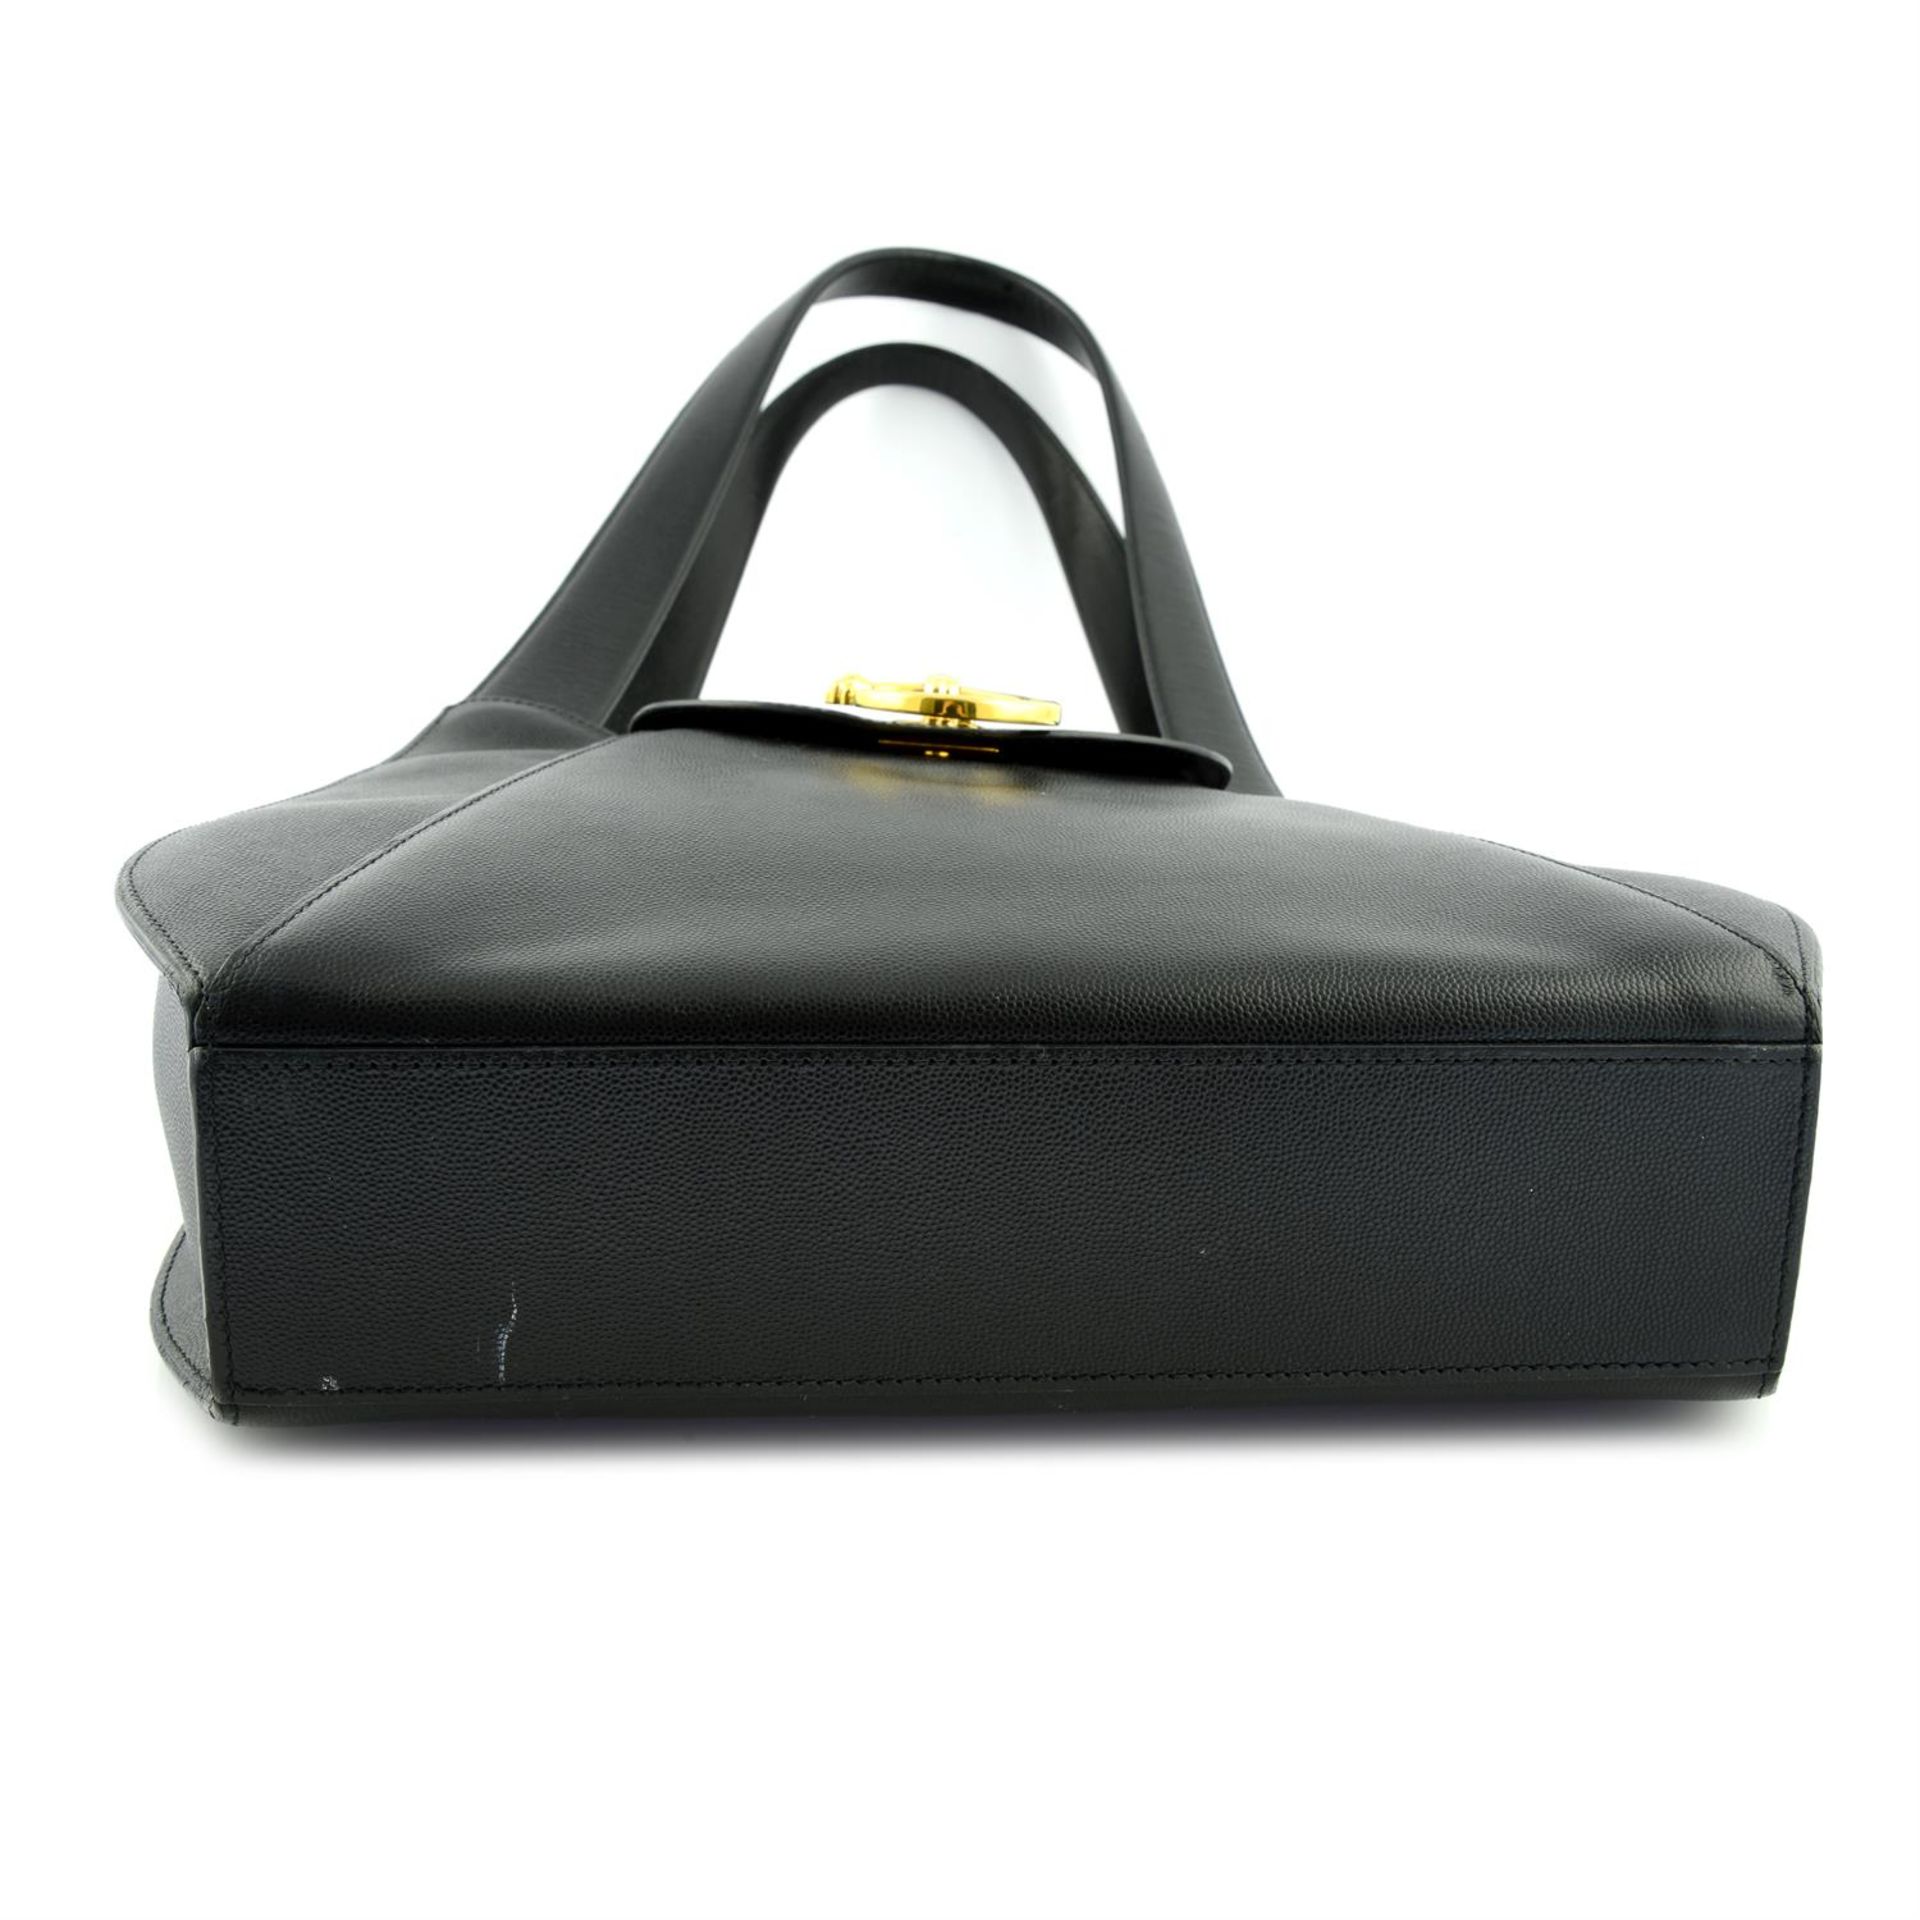 CARTIER - a black leather Panthère handbag. - Image 5 of 7